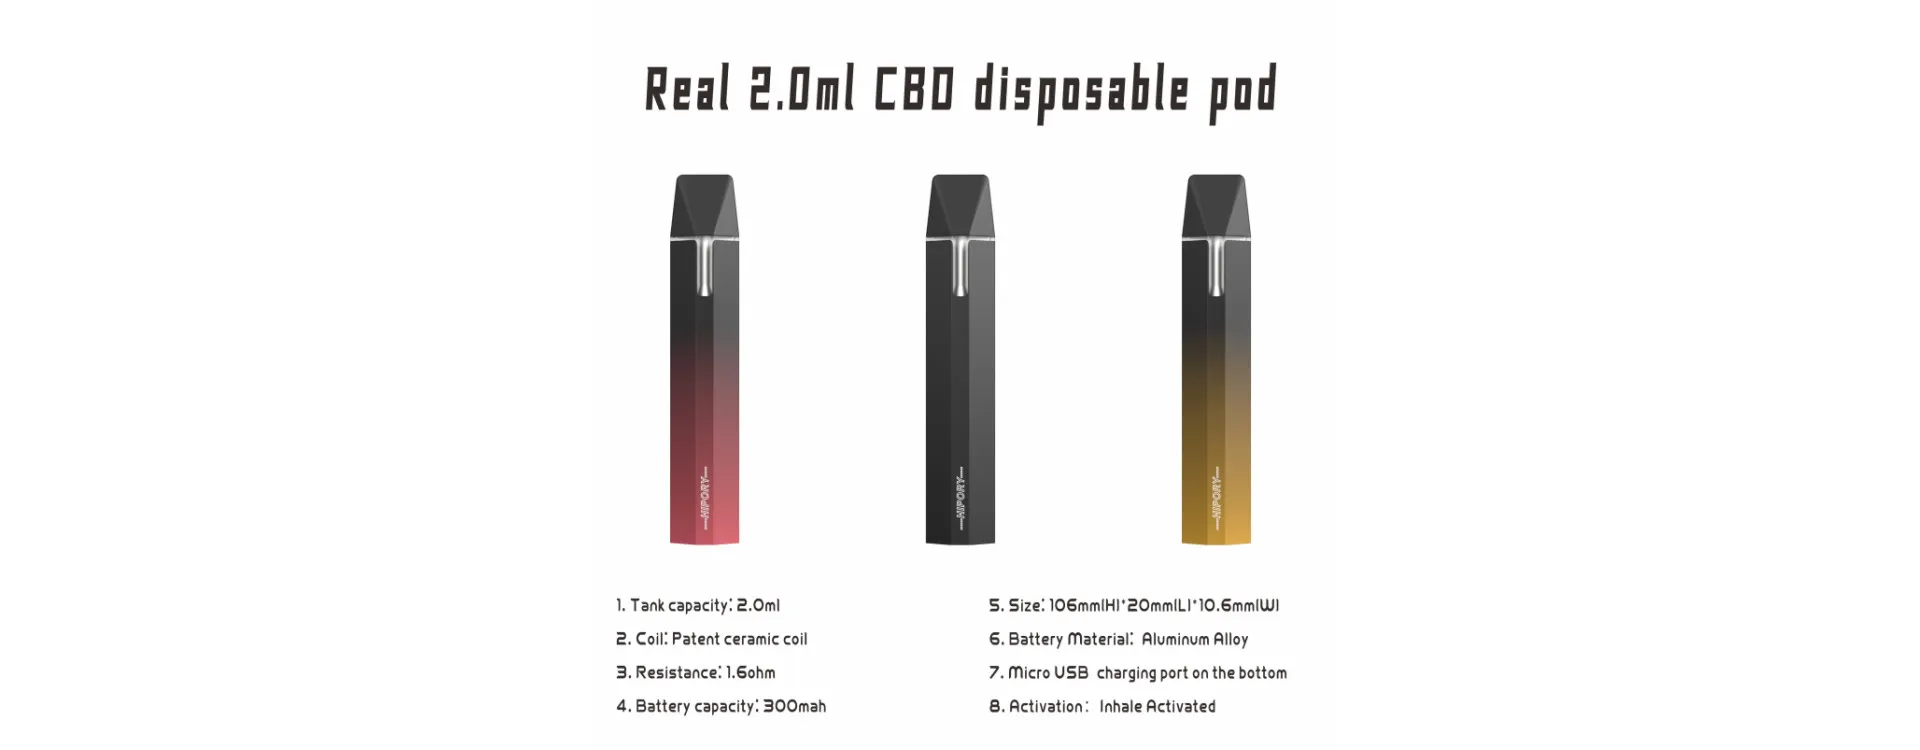 Real 2.0ml CBD disposable Pod